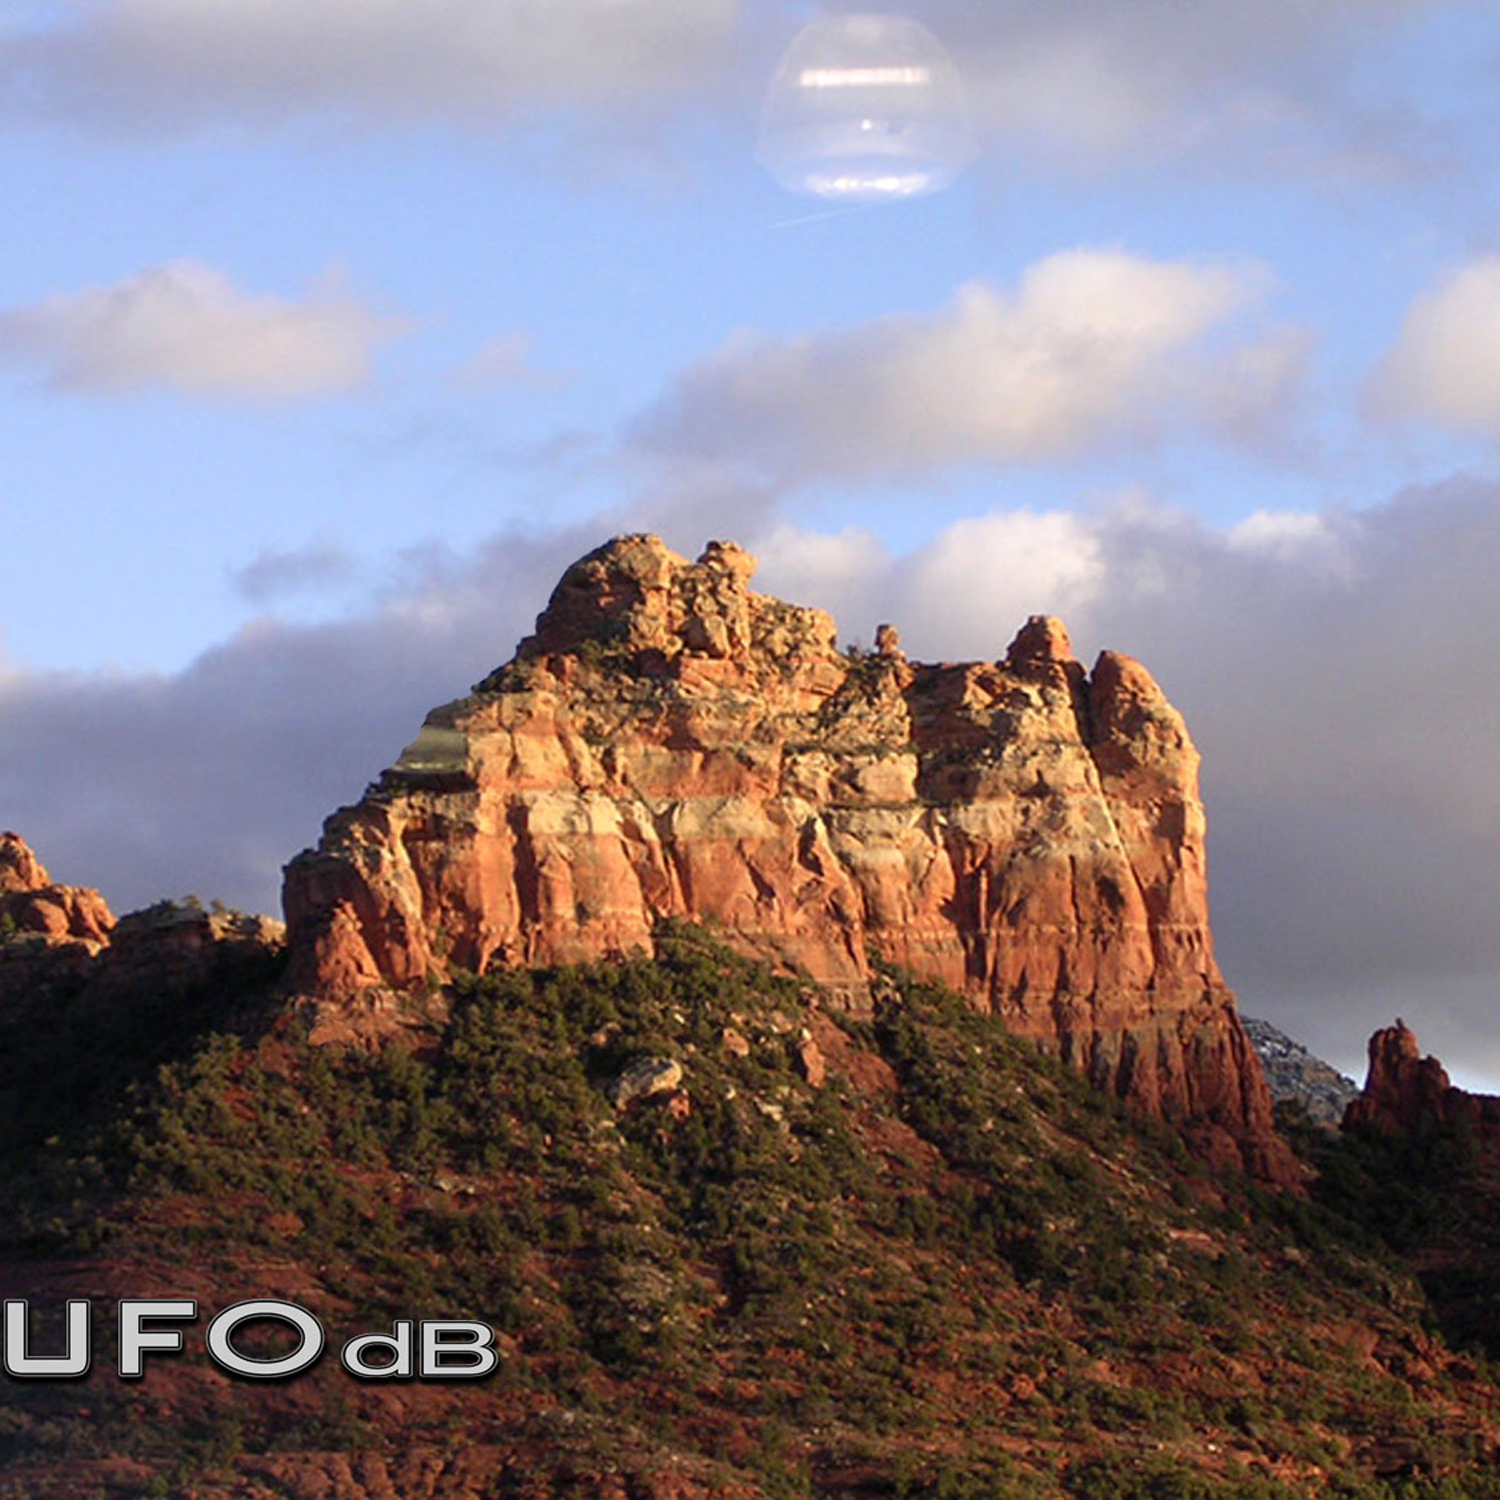 UFO Flying over mountain in the desert of Arizona near Sedona UFO Picture #14-2